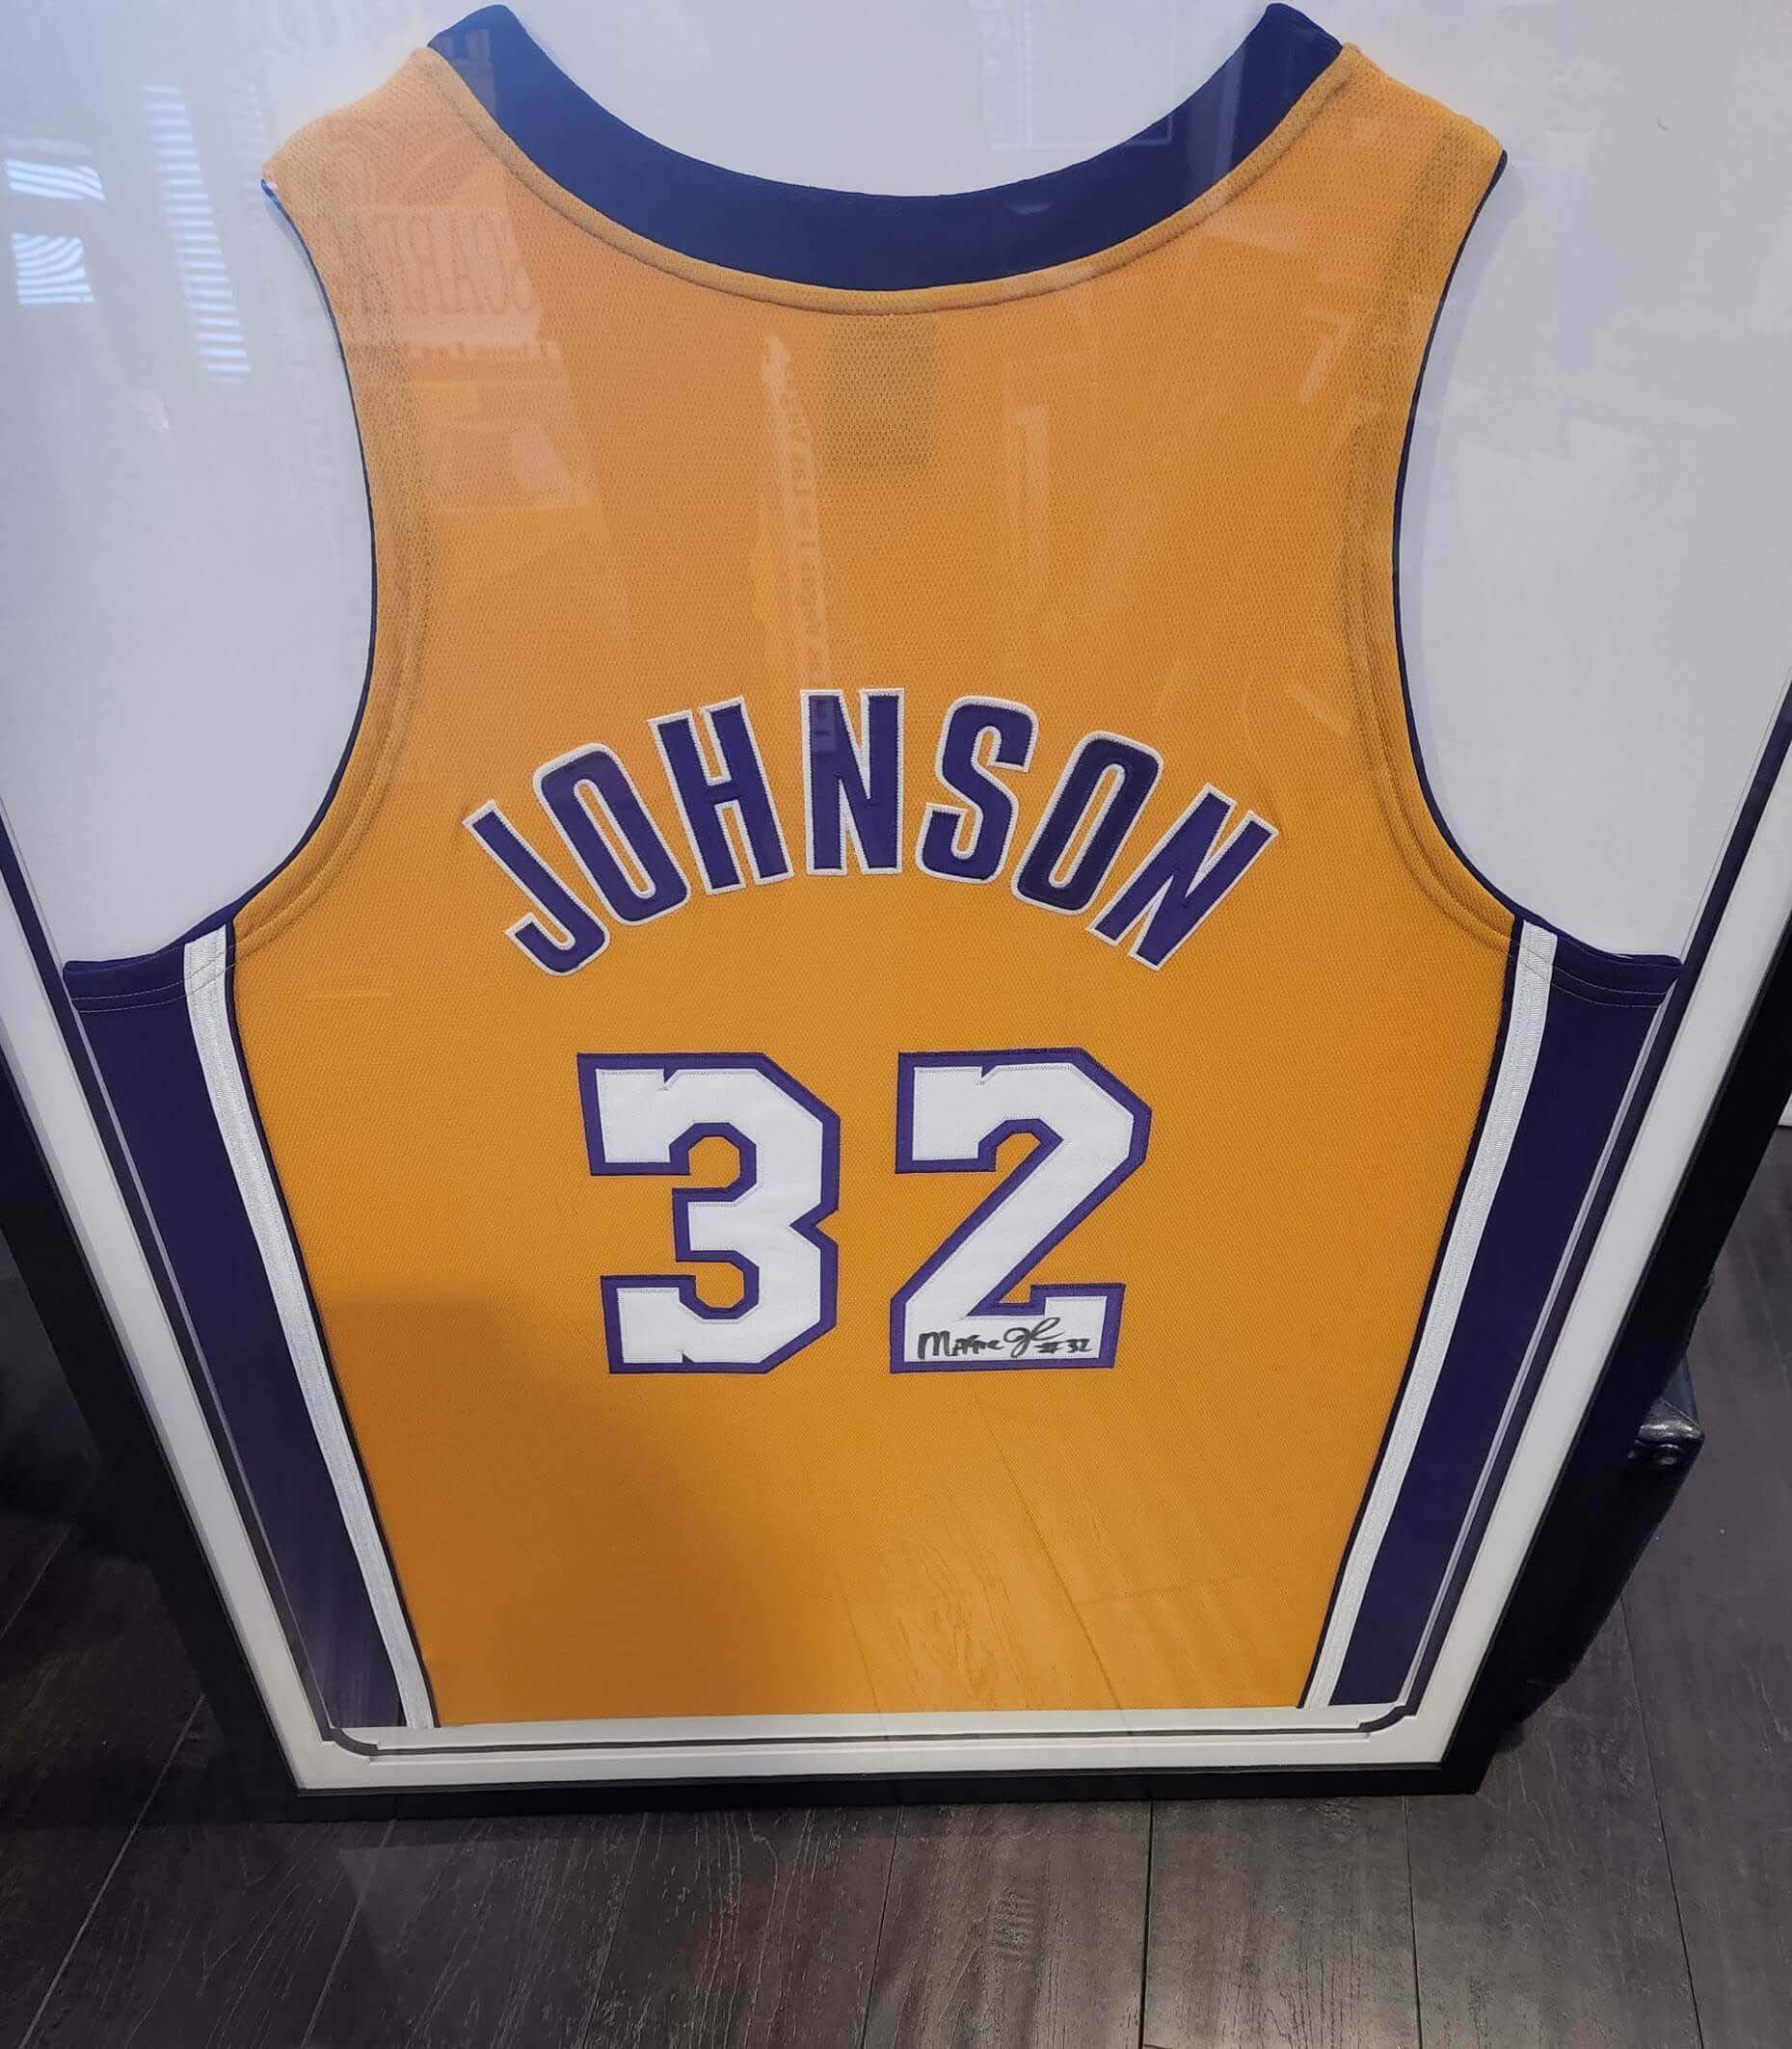 Autographed Magic Johnson NBA Jerseys, Autographed Jerseys, Magic